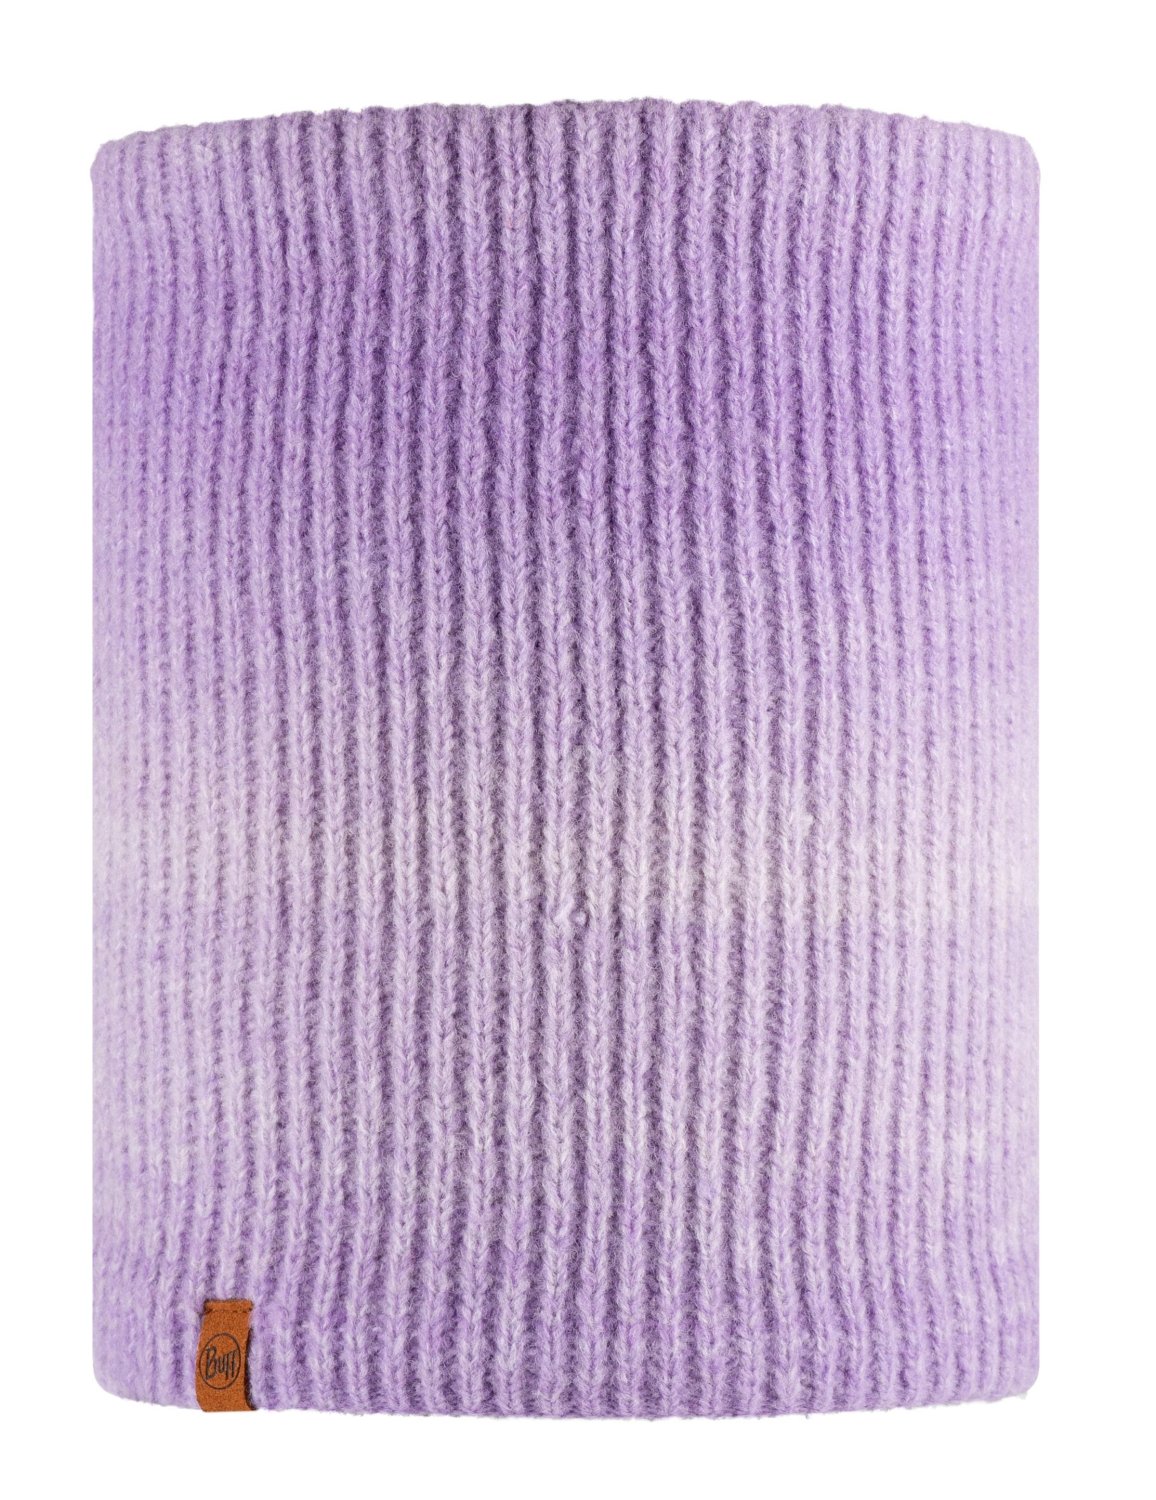 Шарф Buff Knitted & Fleece Neckwarmer Marin Lavender, US:one size, 123520.728.10.00 шапка buff knitted hat marin lavender us one size 123514 728 10 00